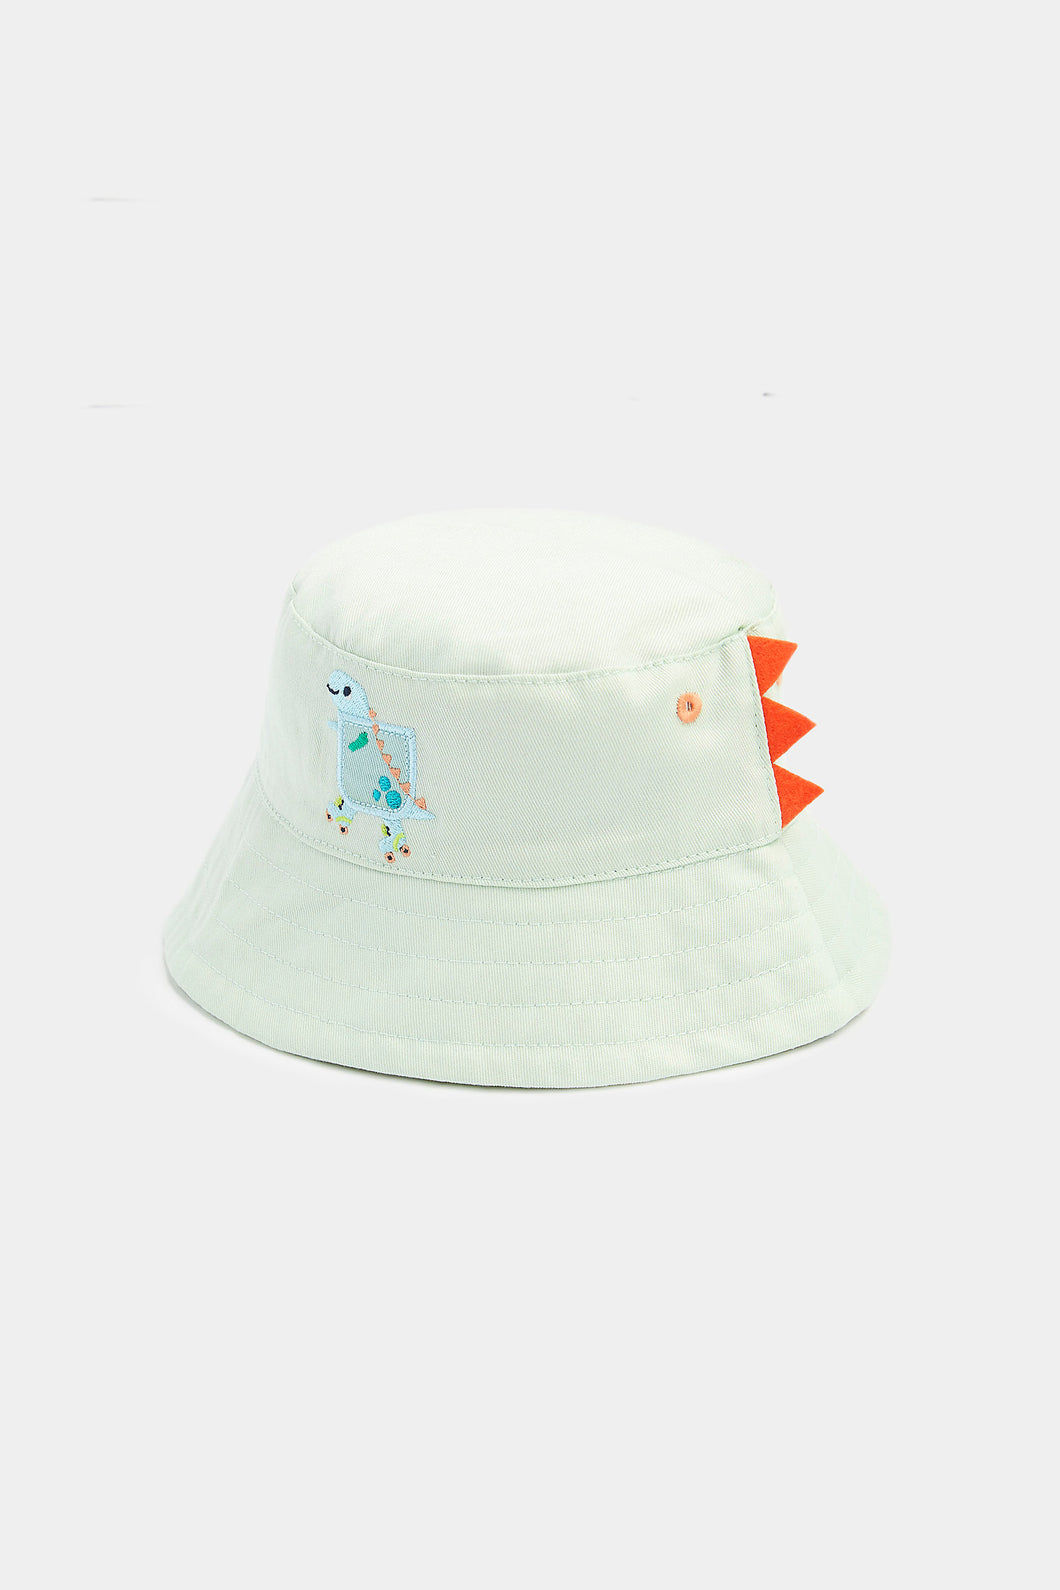 Mothercare Dino Sun Hat